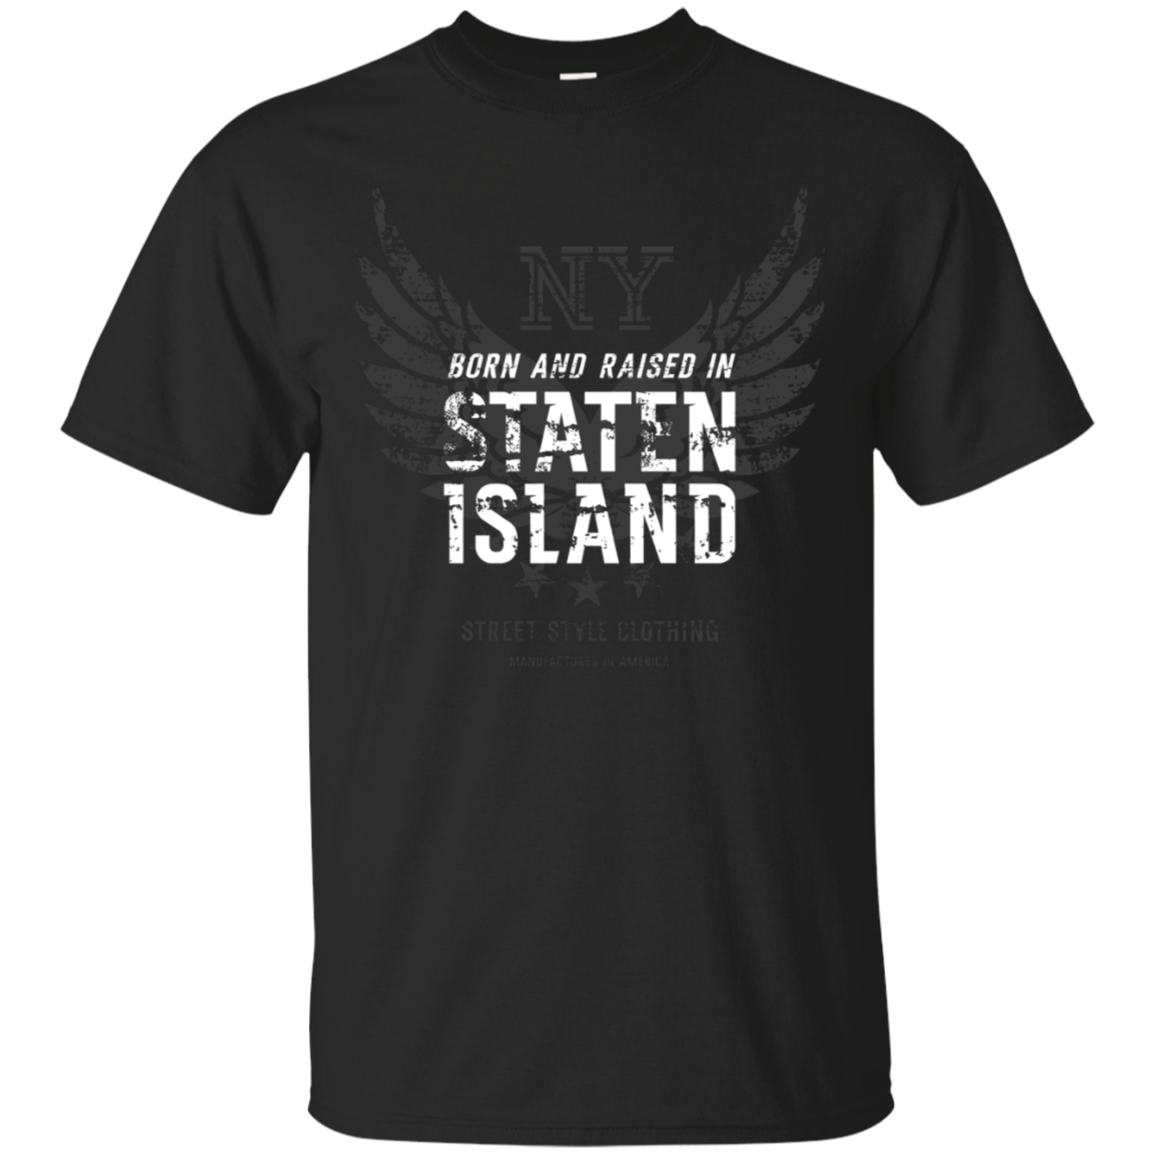 Staten Island Shirts Born And Raised Street Style - Baby Kools